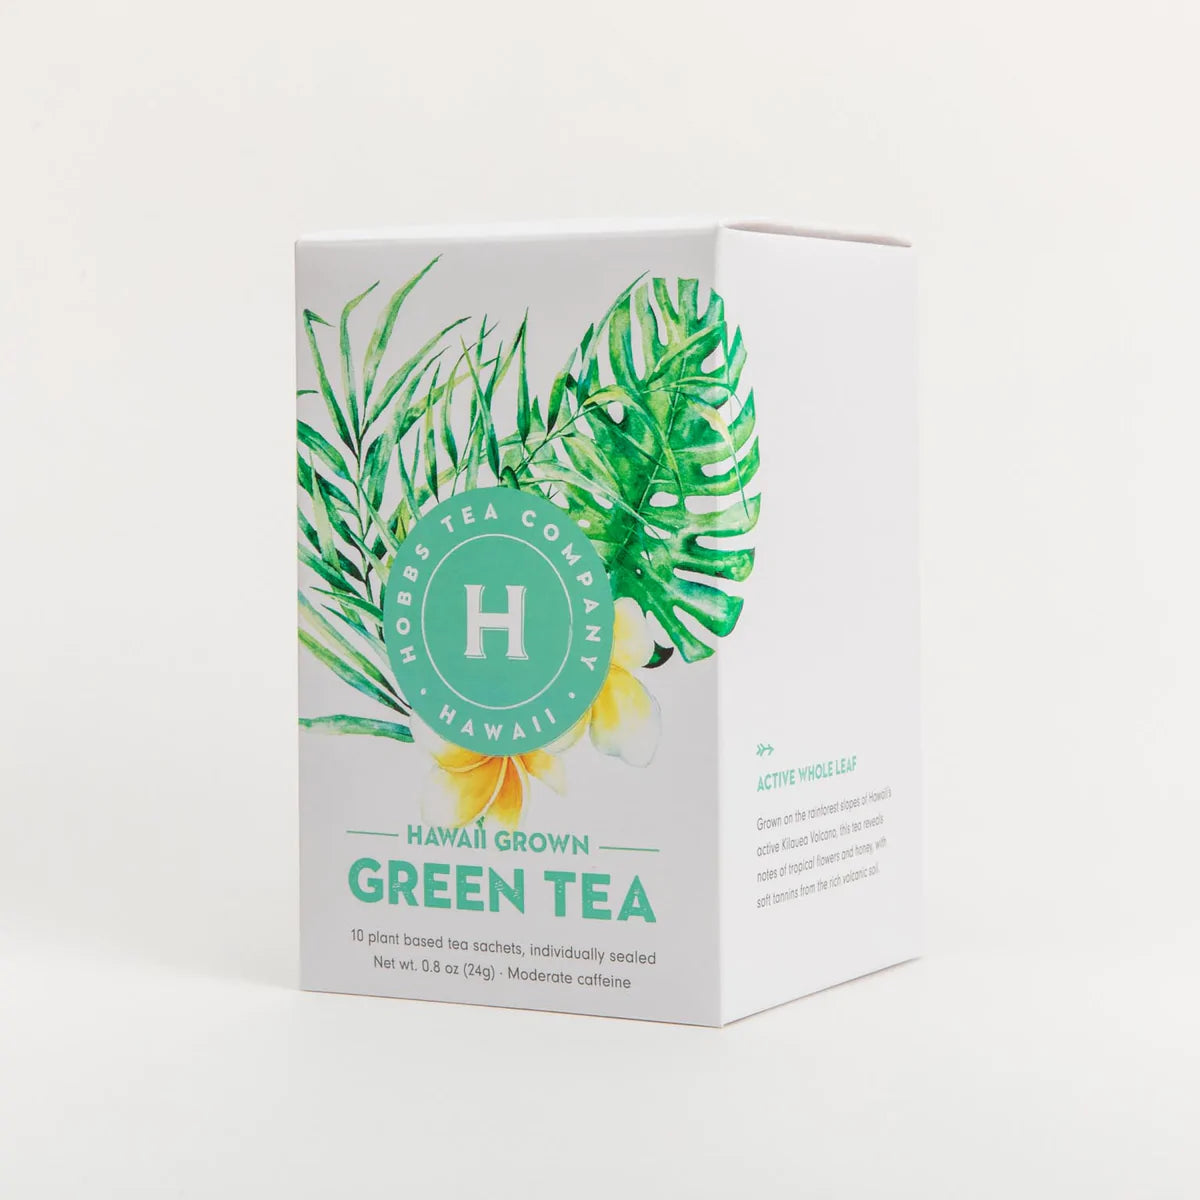 Hobbs tea - green tea box